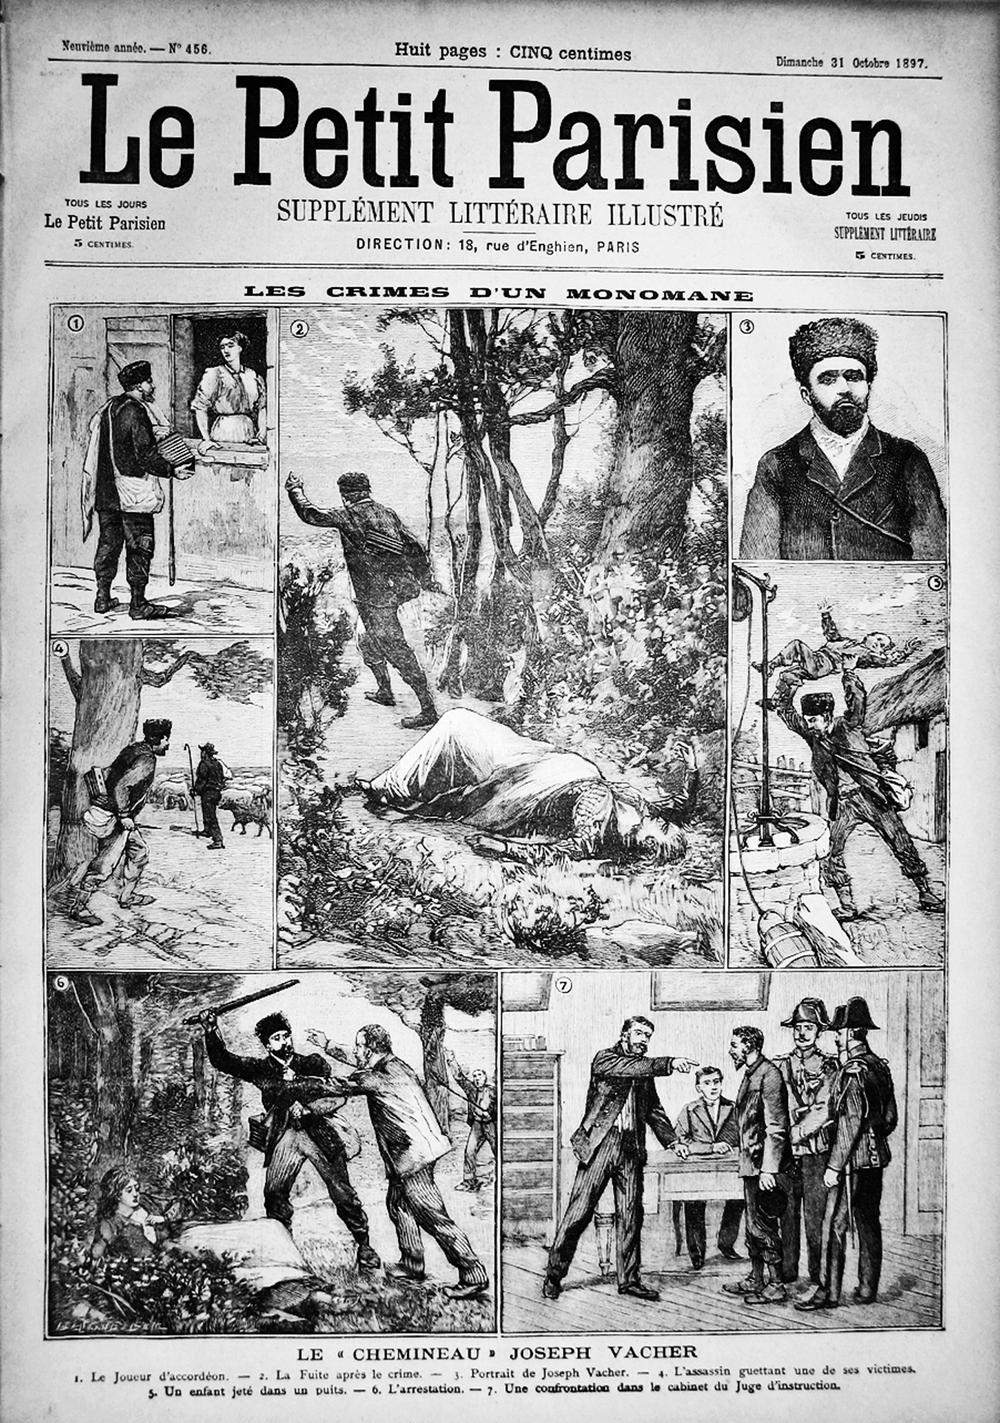 Tabloid coverage of Joseph Vacher's killing spree. (Knopf Publishers)